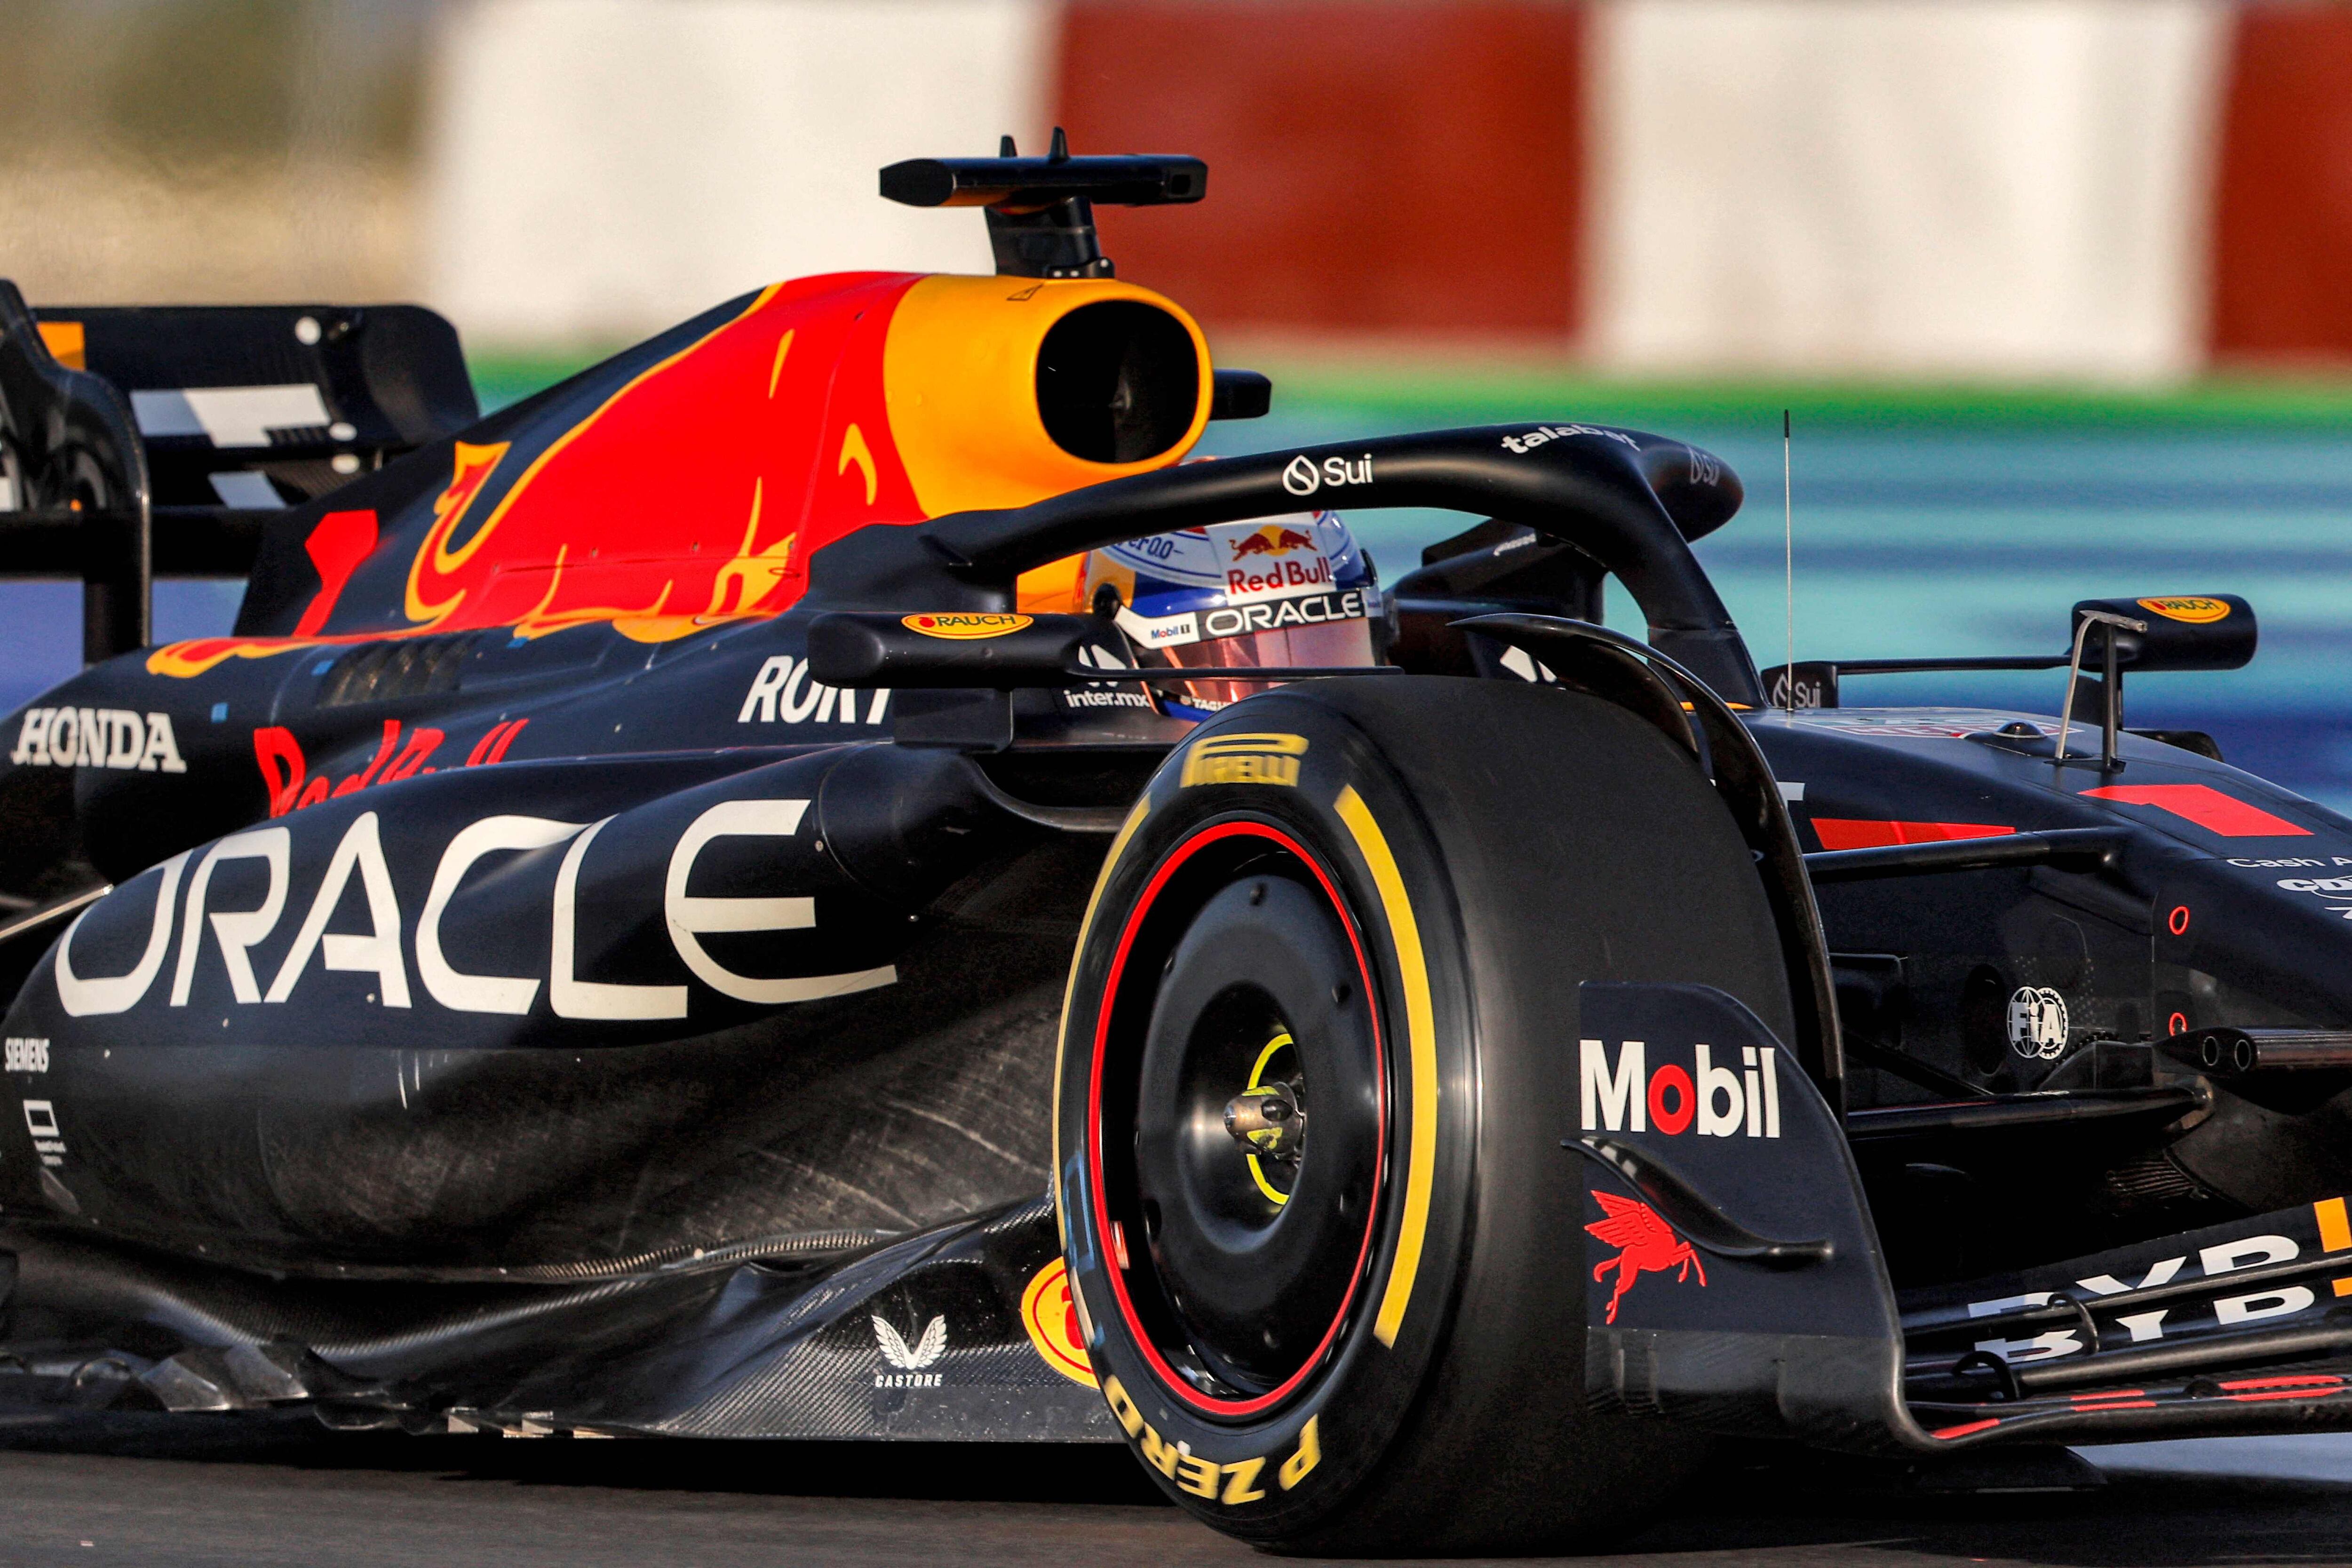 Max Verstappen se corona por tercera ocasión consecutiva campeón de la Fórmula 1